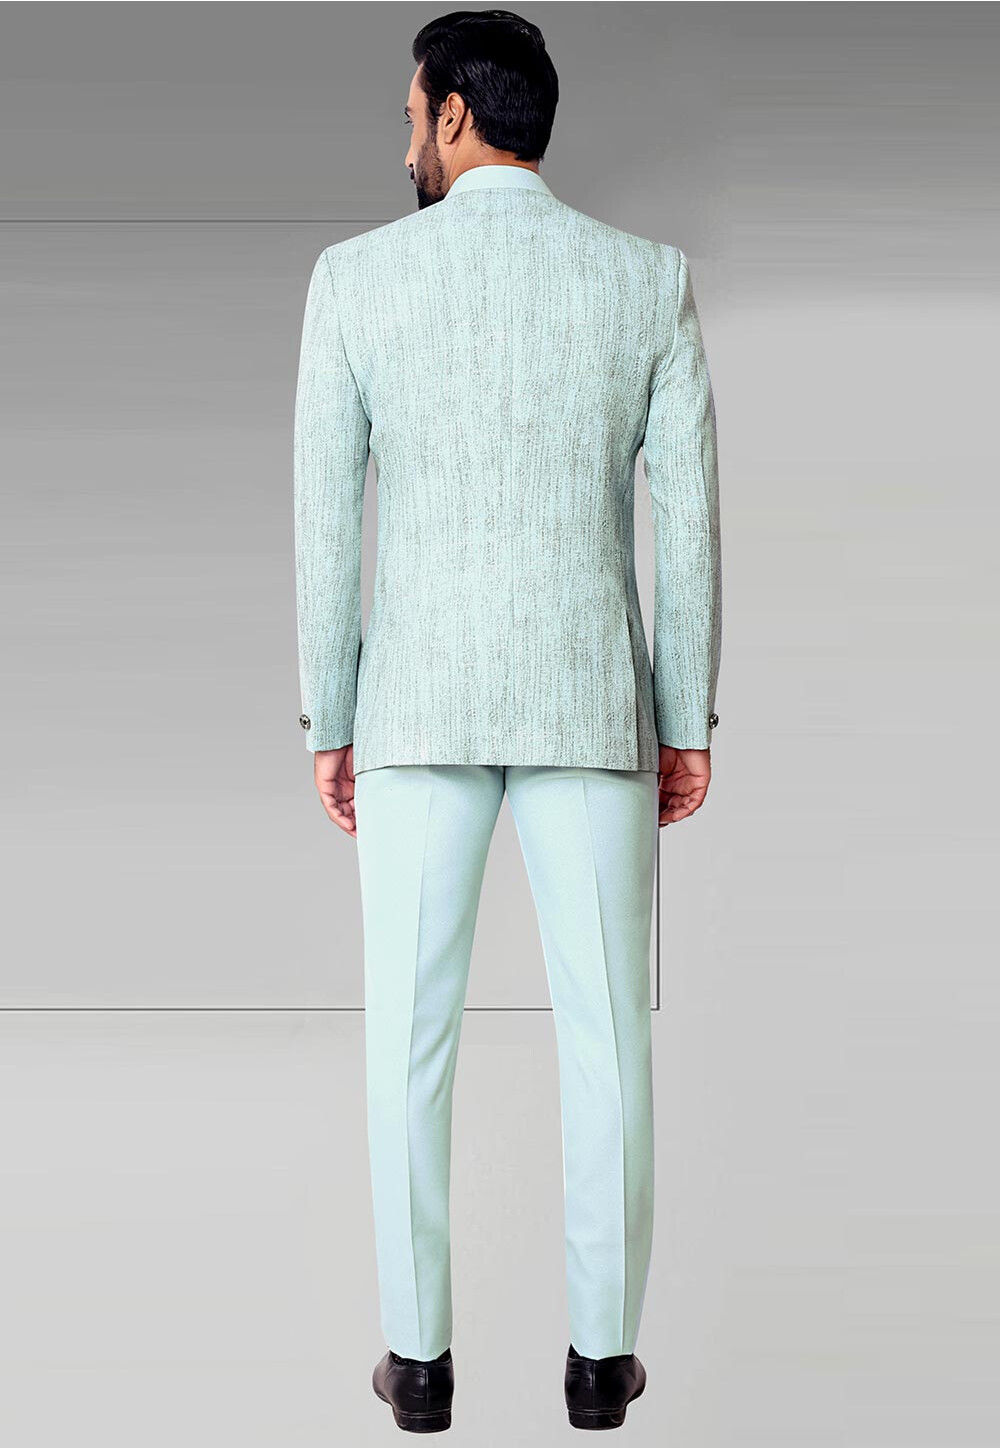 Buy Digital Printed Terry Rayon Layered Jodhpuri Suit in Sky Blue ...